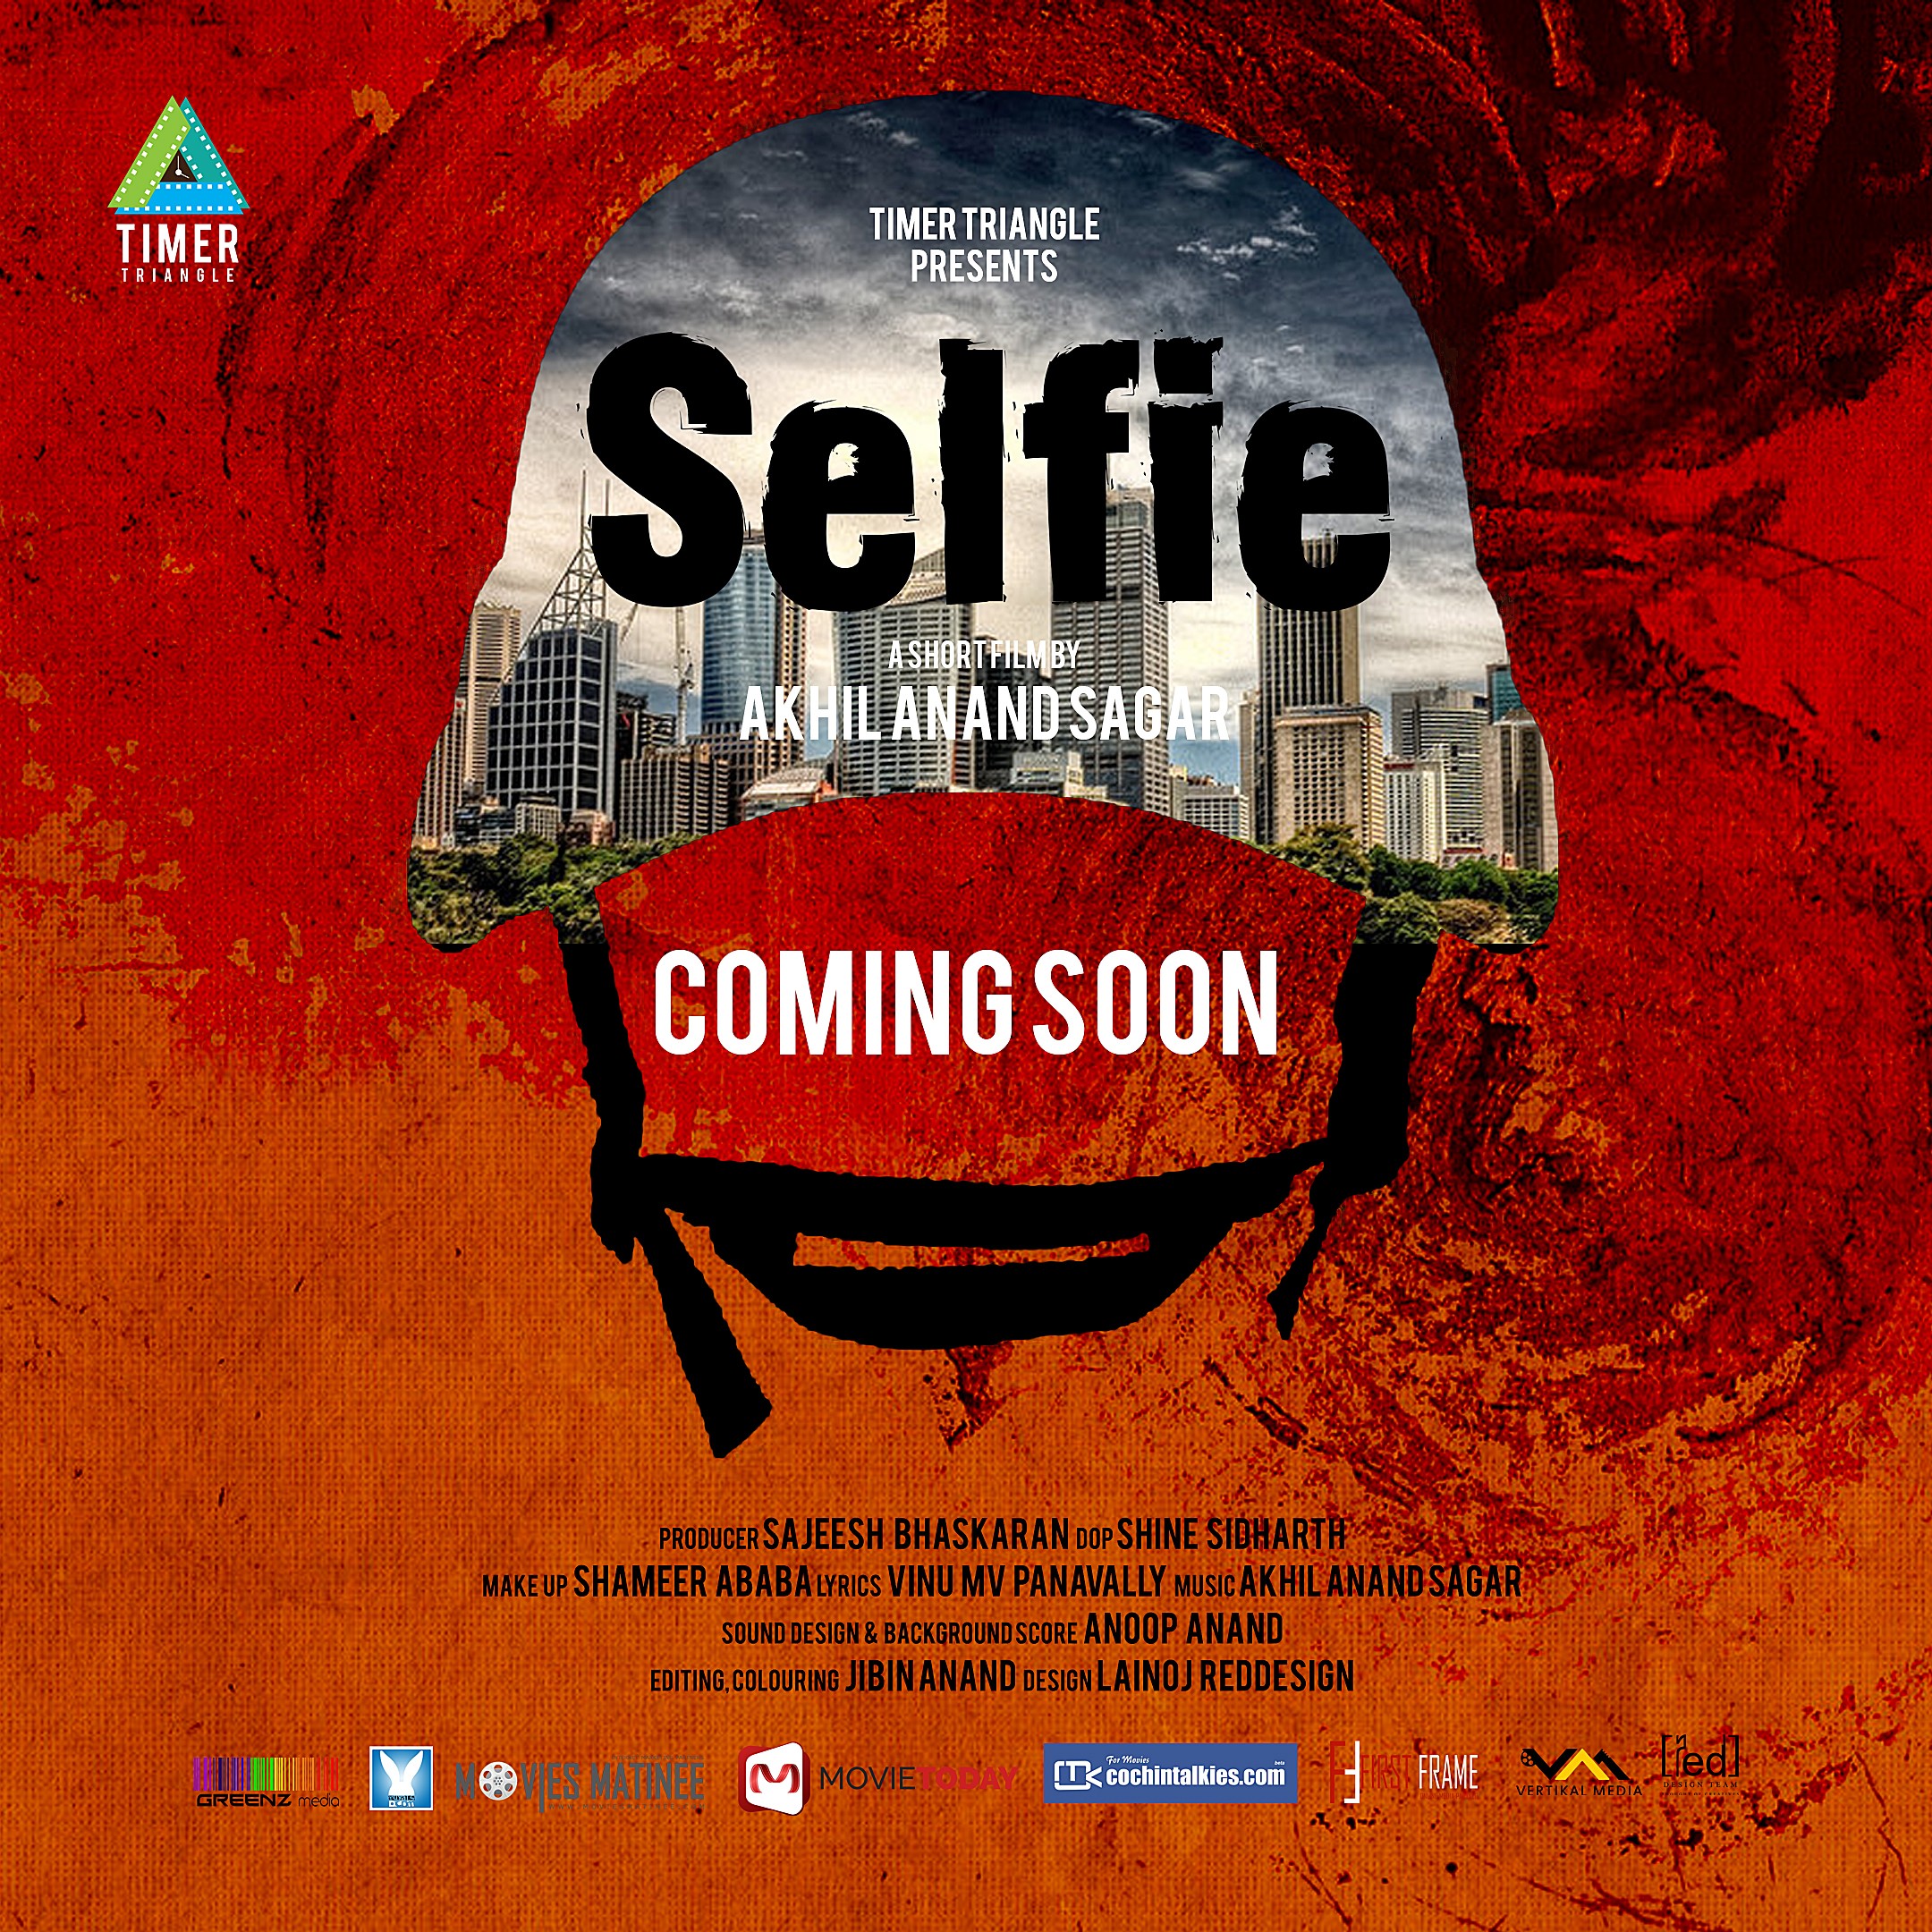 Mega Sized Movie Poster Image for Selfie